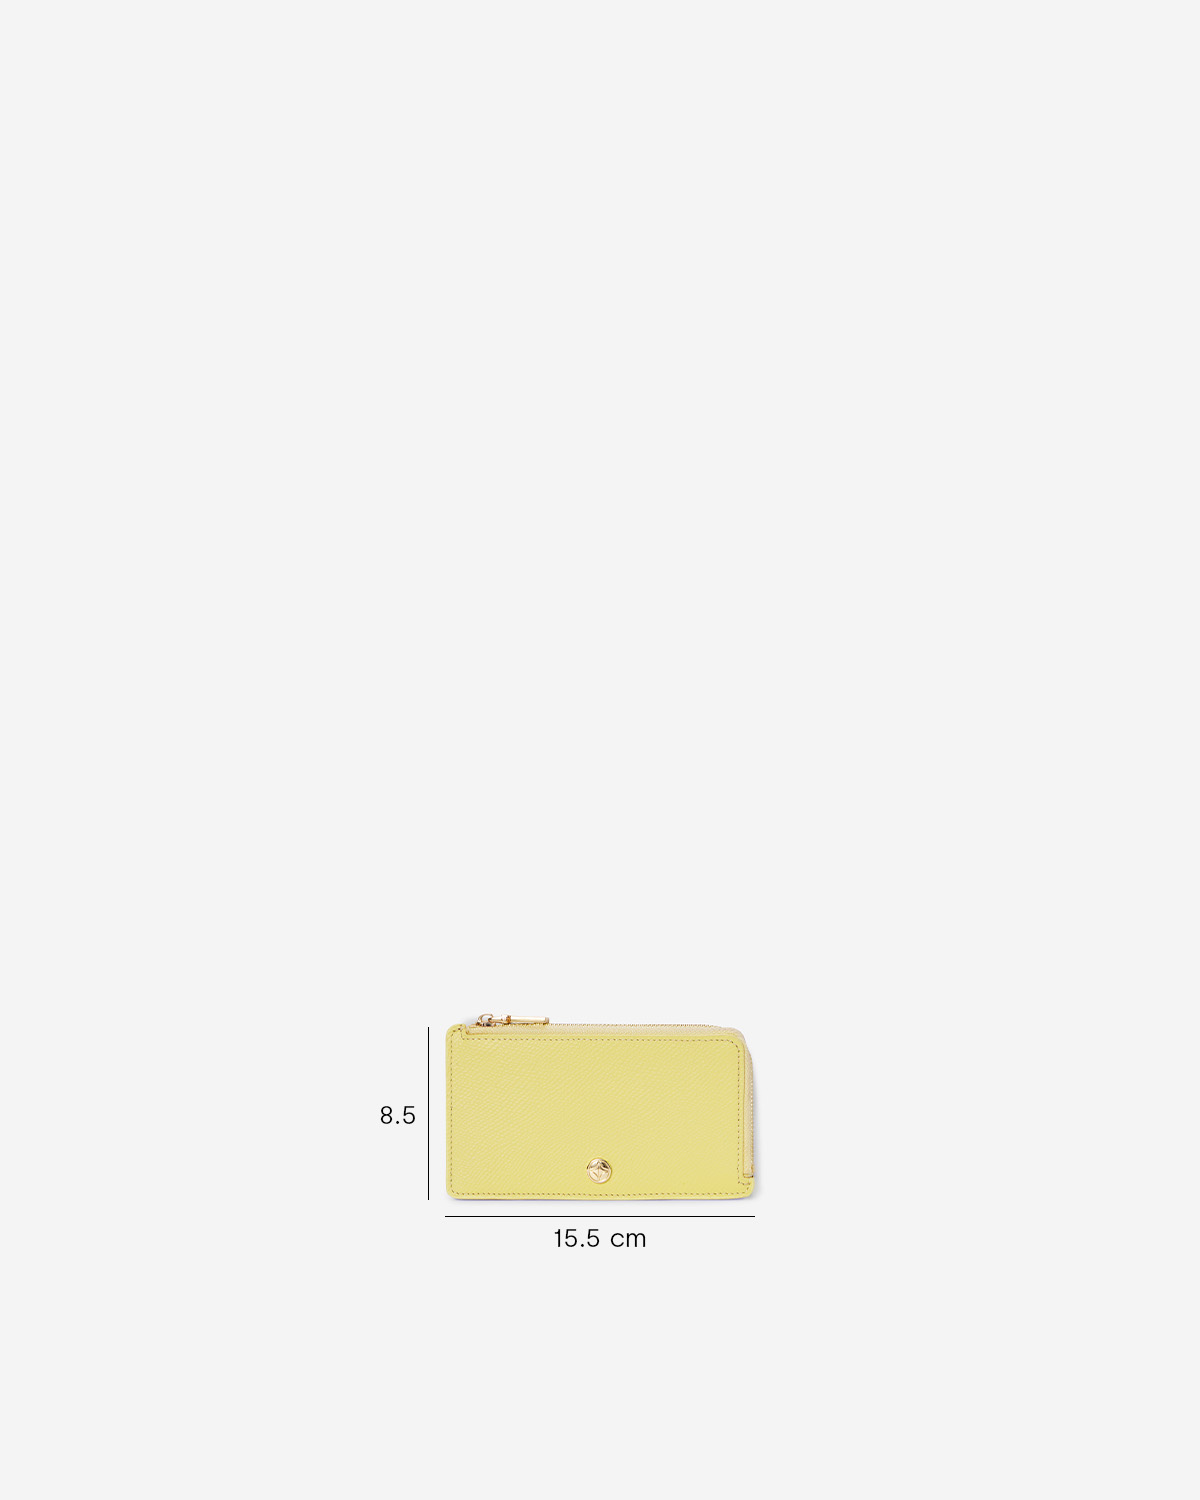 VERA Emily Long Card holder in Happy Yellow กระเป๋าใส่บัตรหนังแท้ ทรงยาว พร้อมช่องซิบ สีเหลื